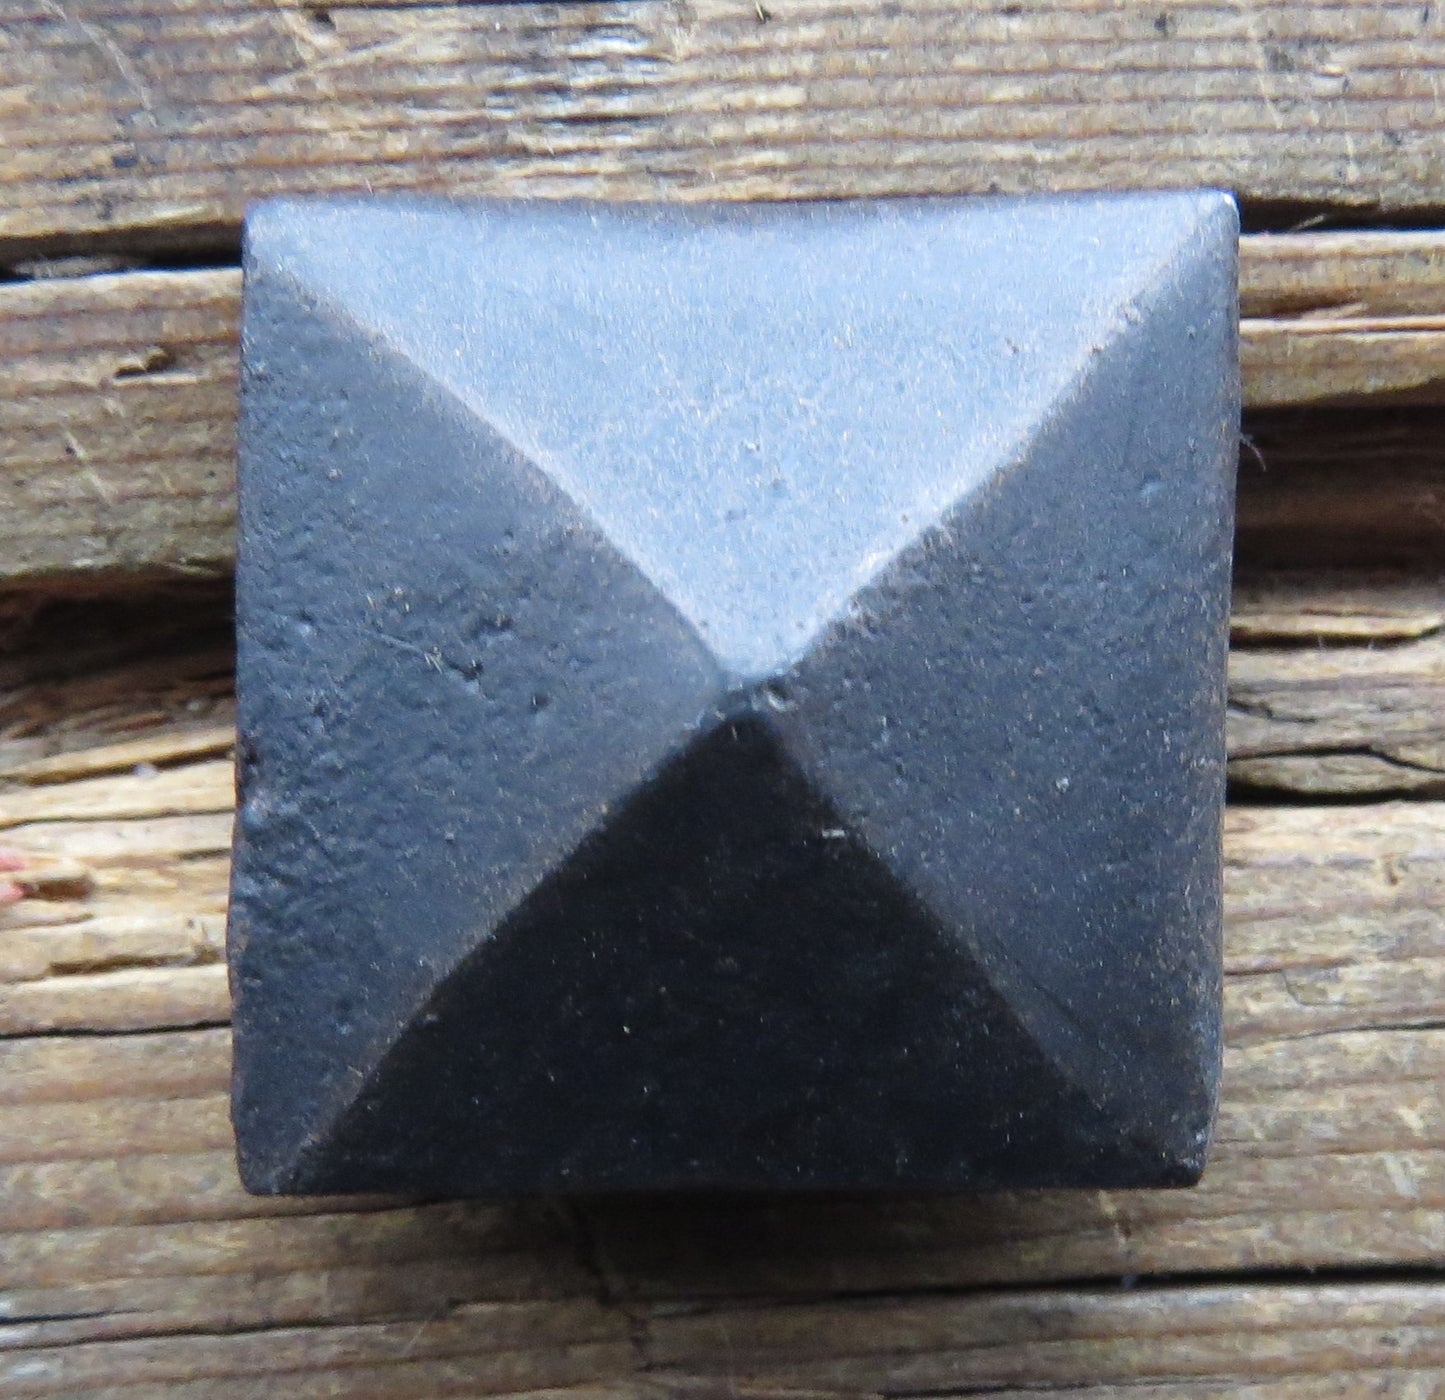 3/4" Square Hammered Pyramid Head Nails